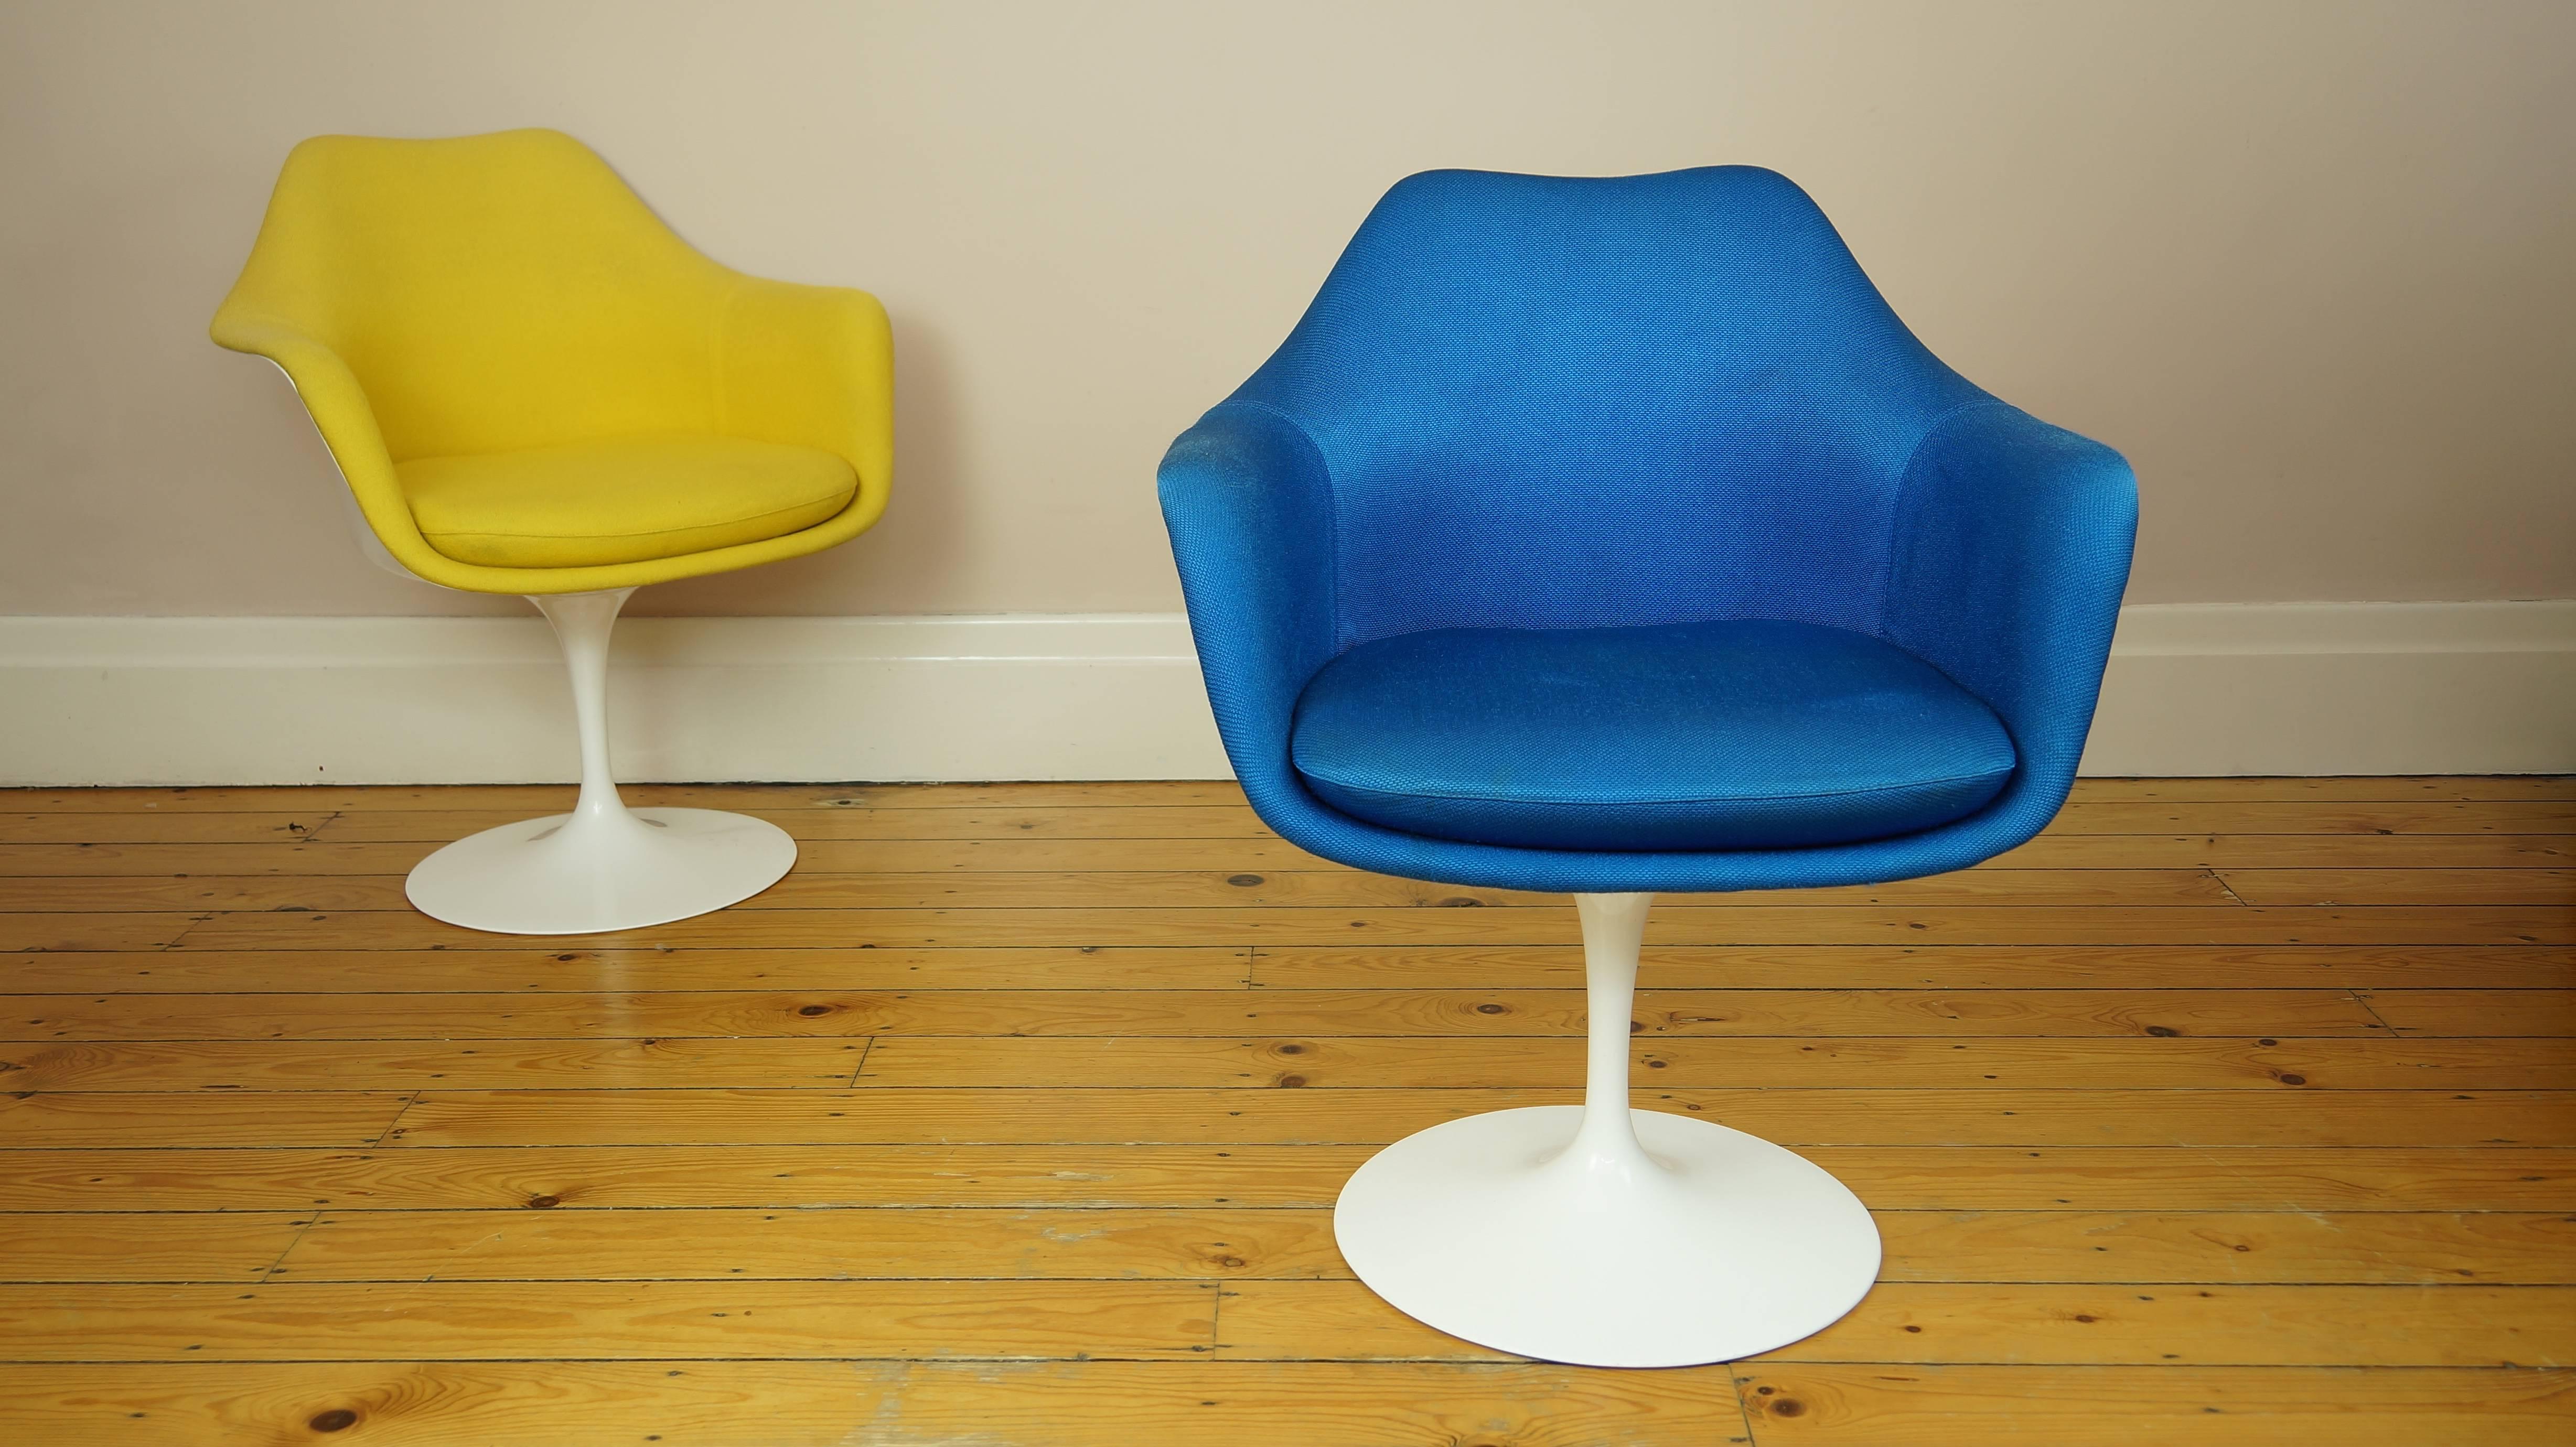 Vintage Tulip Chair / Armchair by Eero Saarinen for Knoll, Blue Upholstery 1